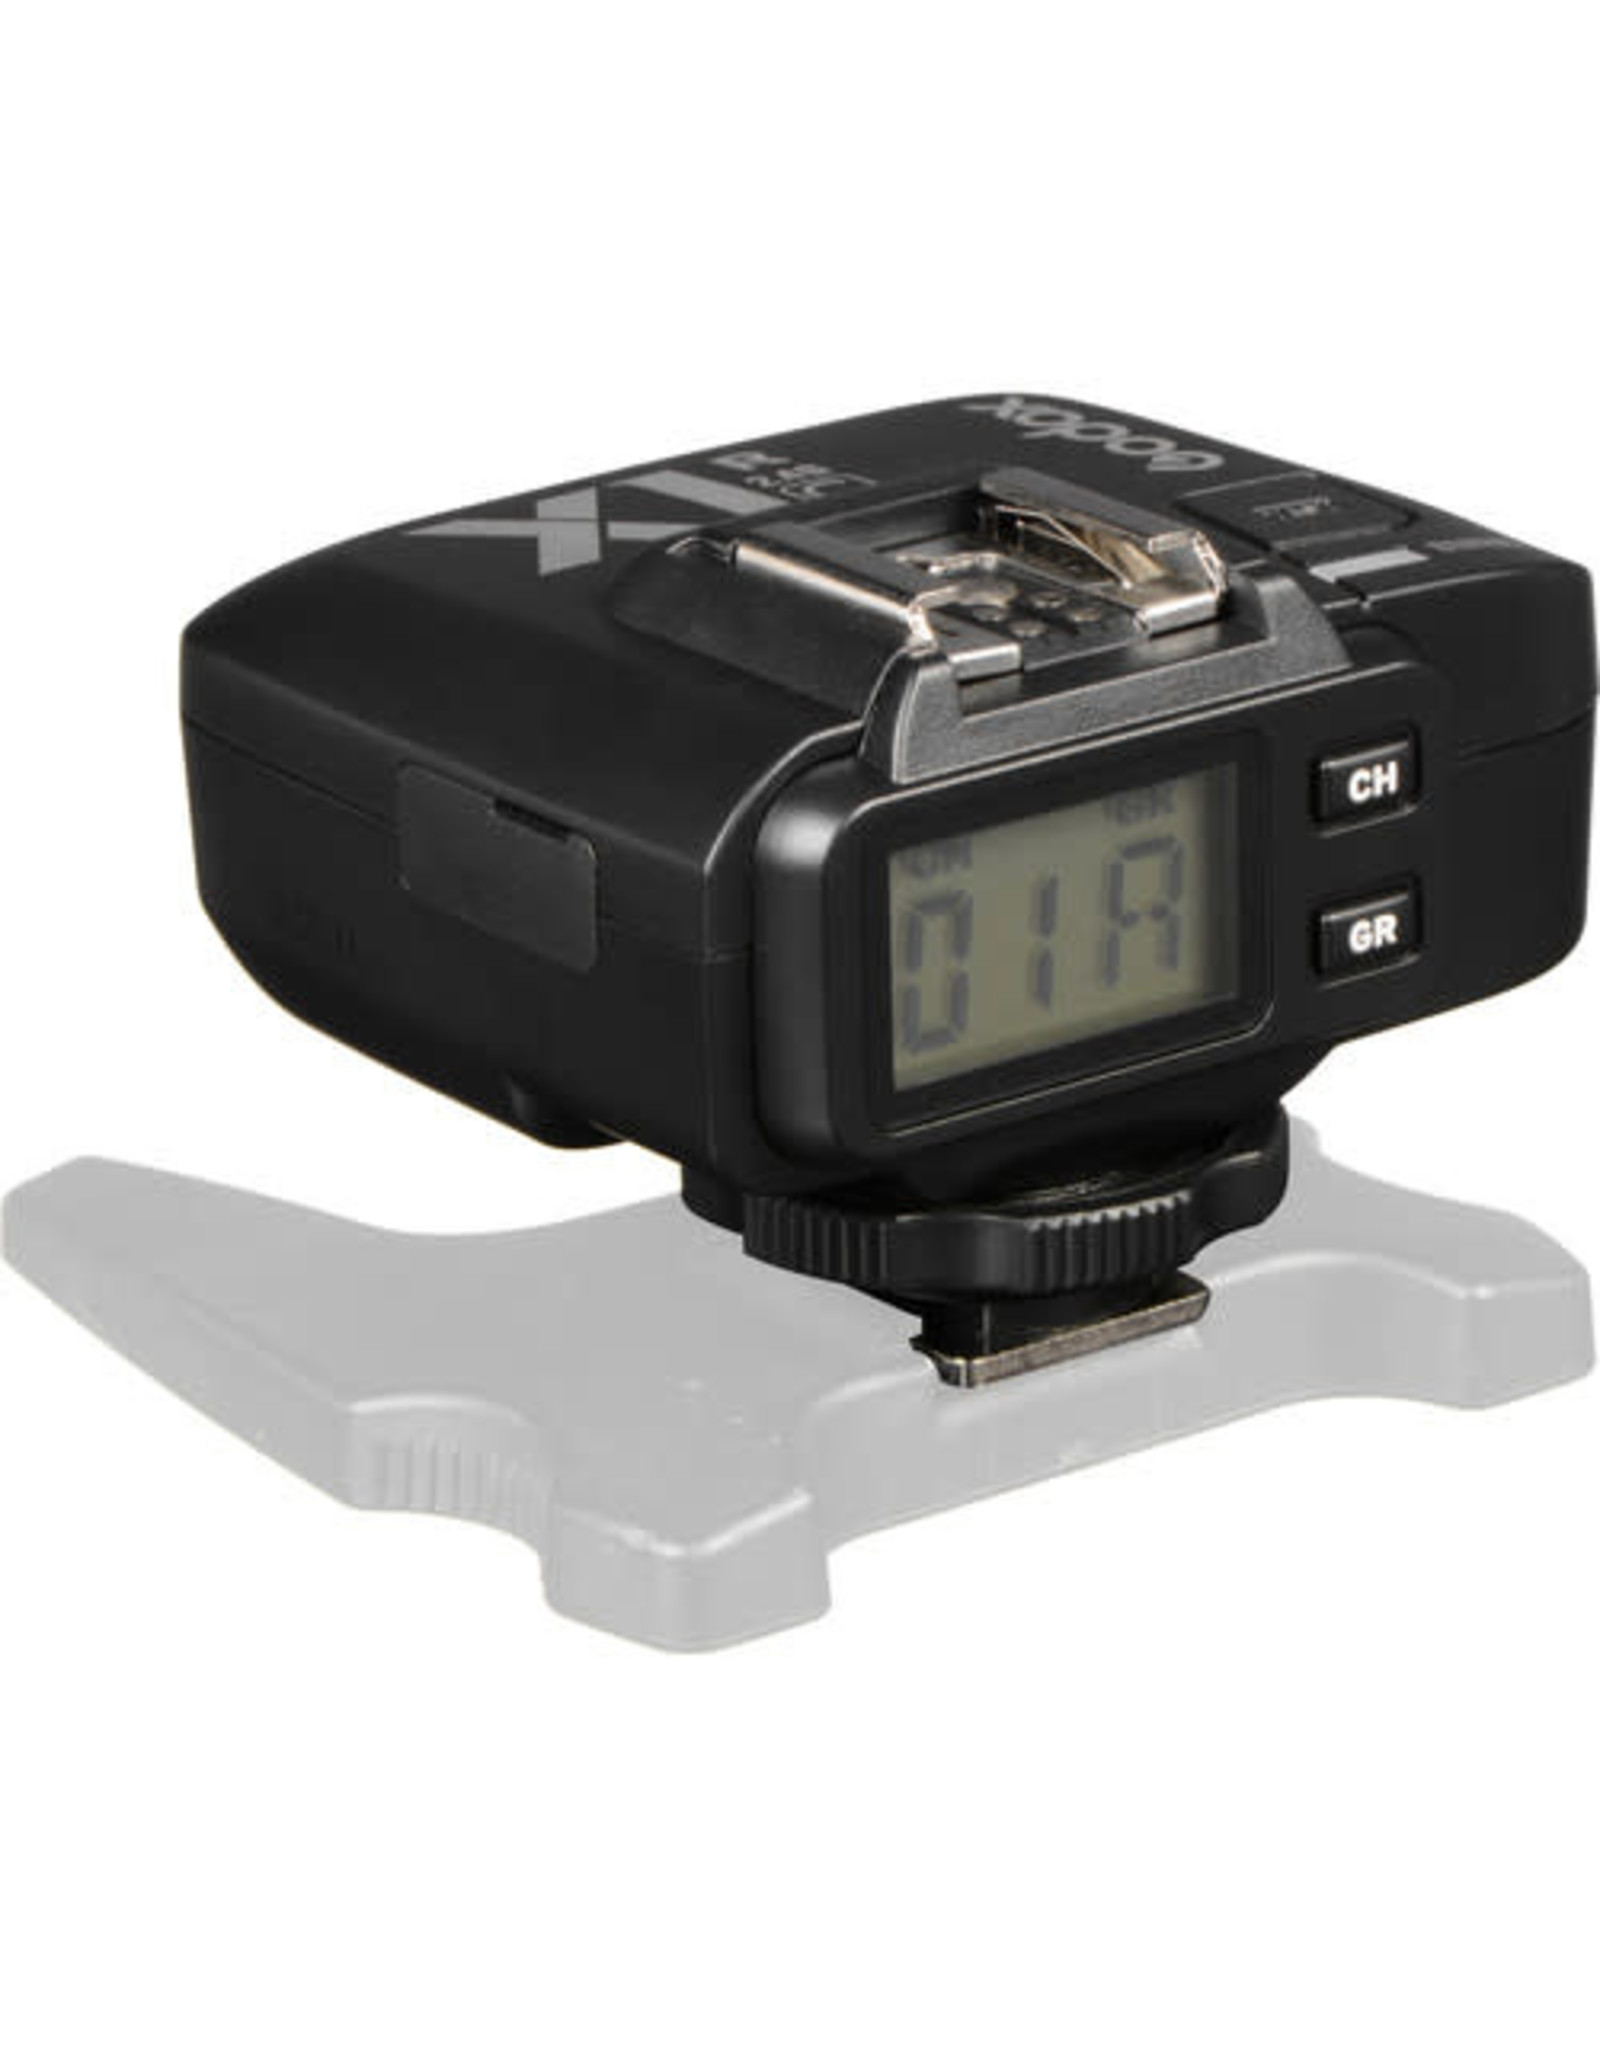 Godox X1R-C TTL Wireless Flash Trigger Receiver for Canon